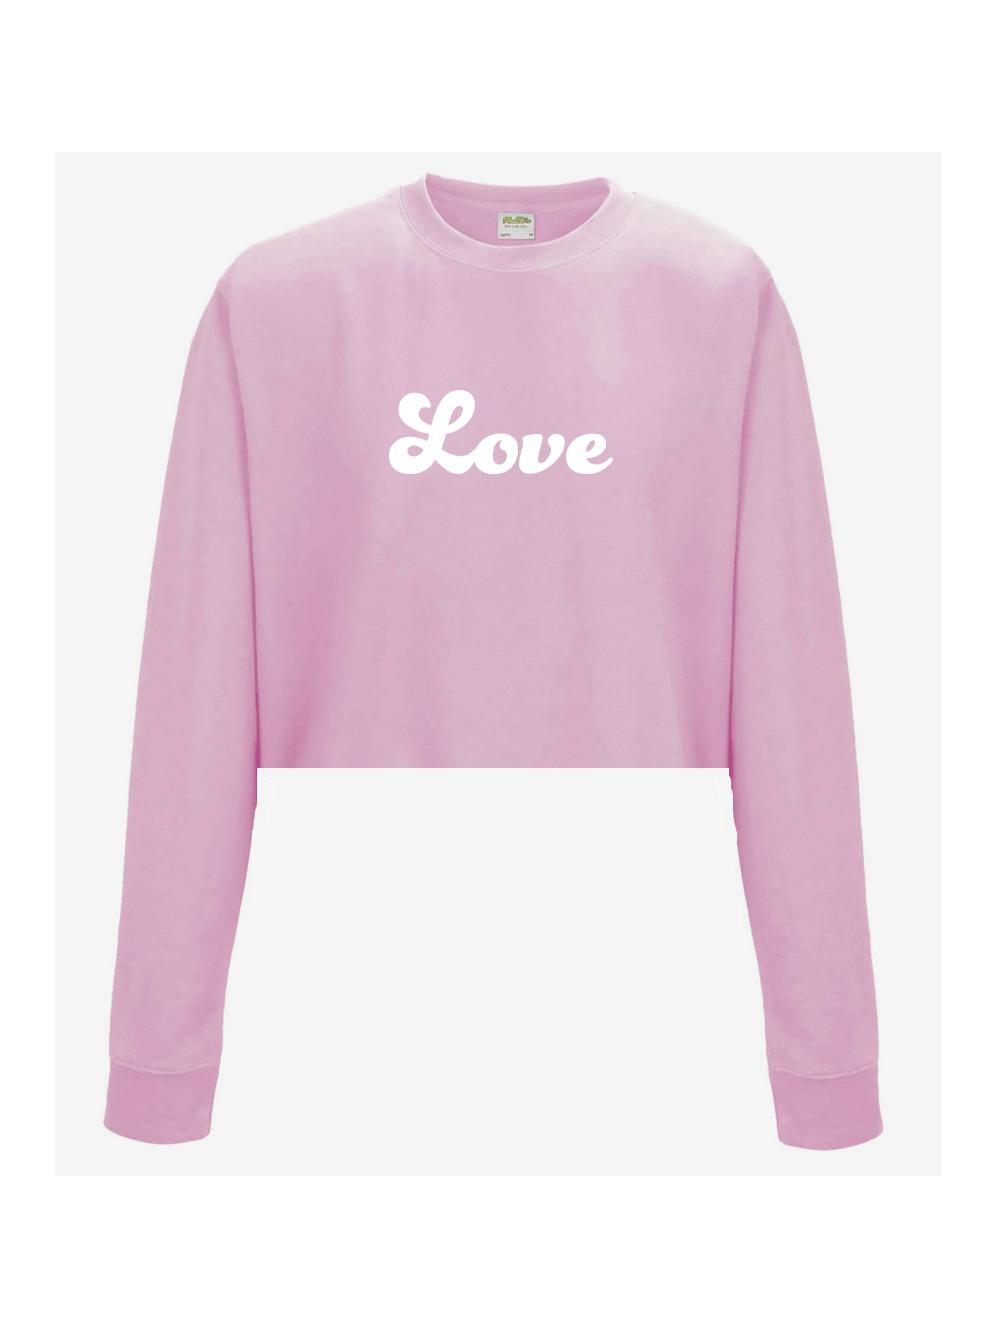 LOVE cropped sweatshirt